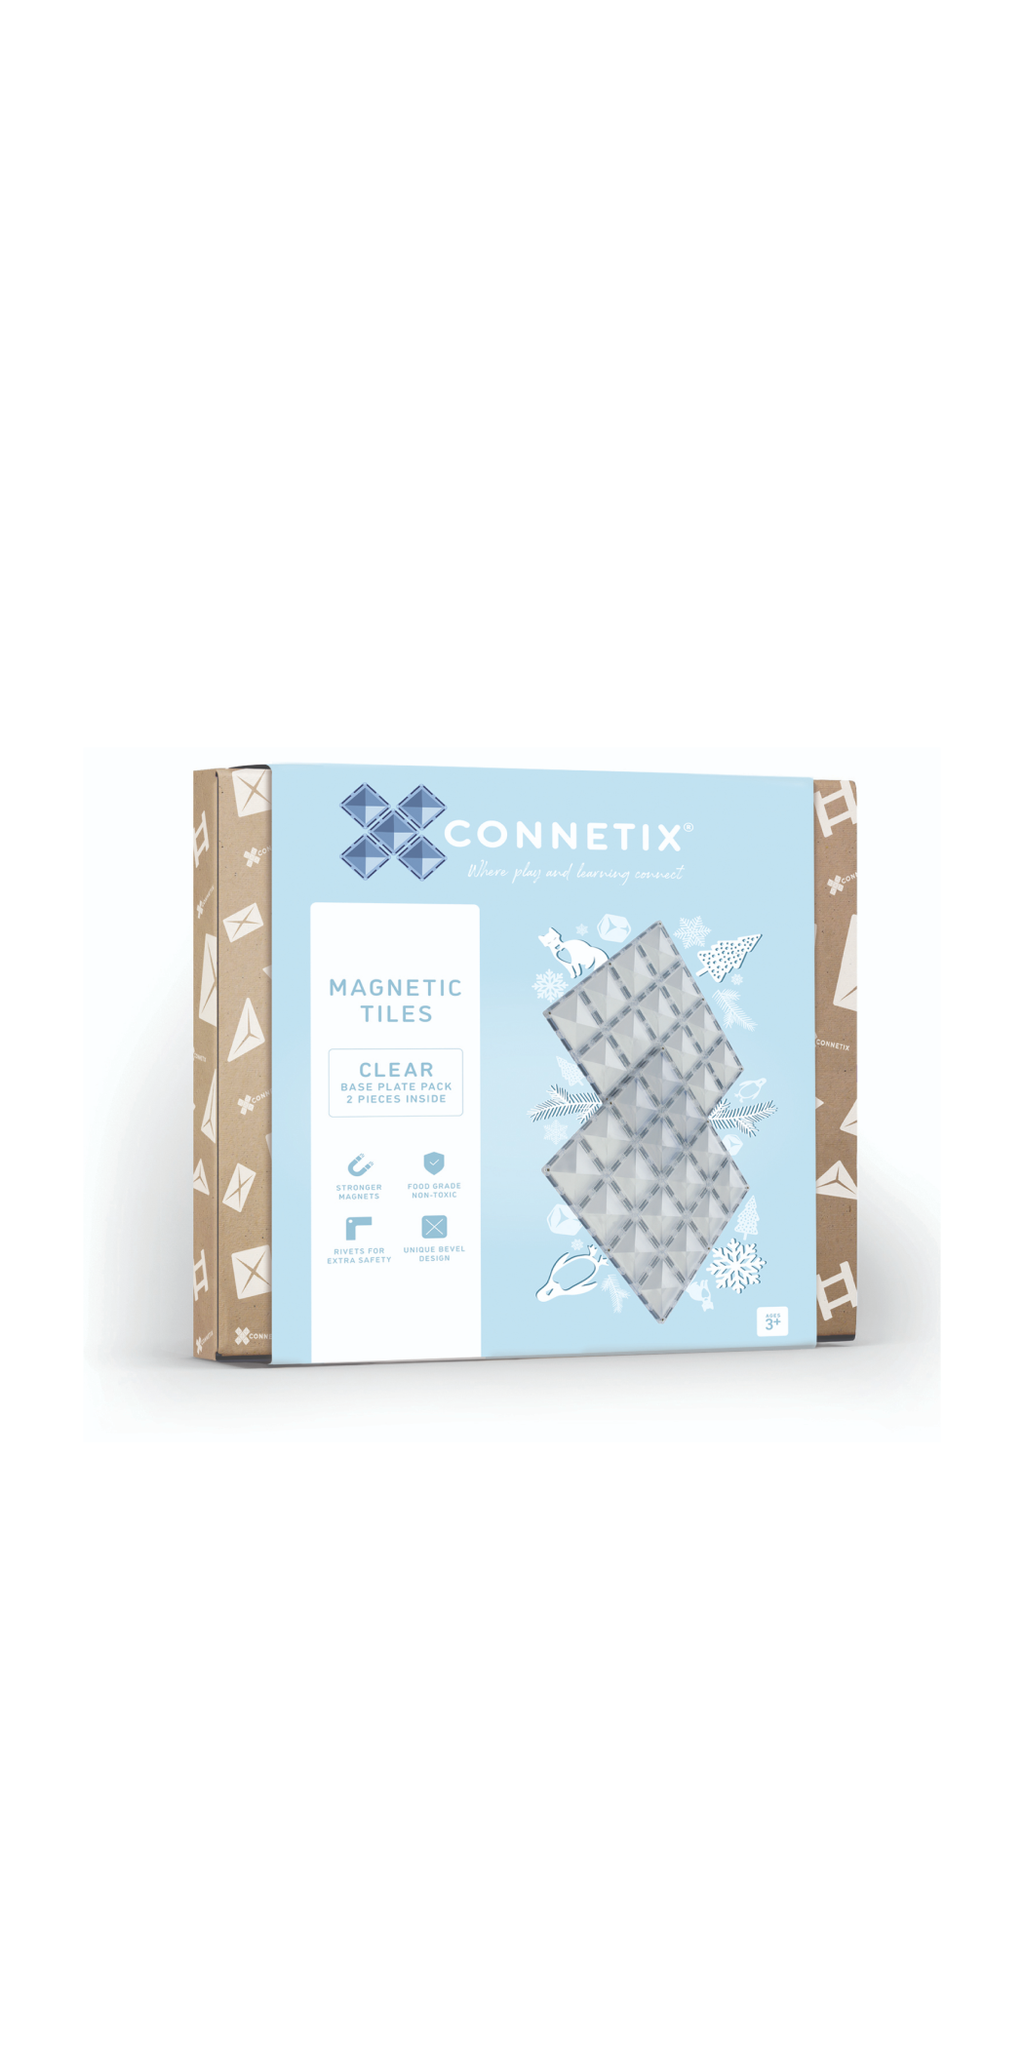 Connetix- new-11